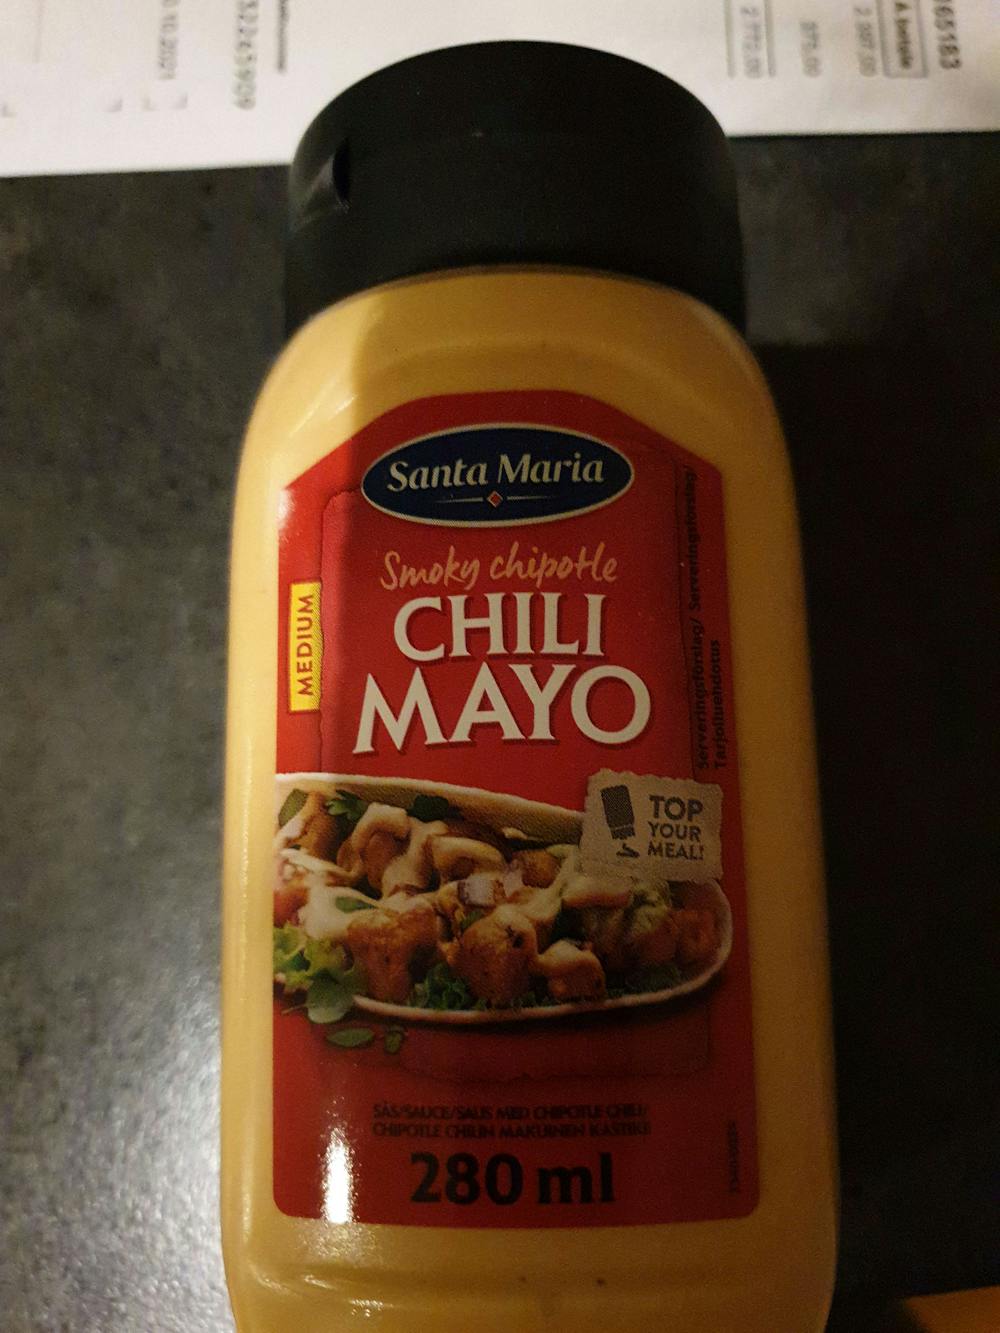 Smoky chipotle chili mayo, Santa Maria